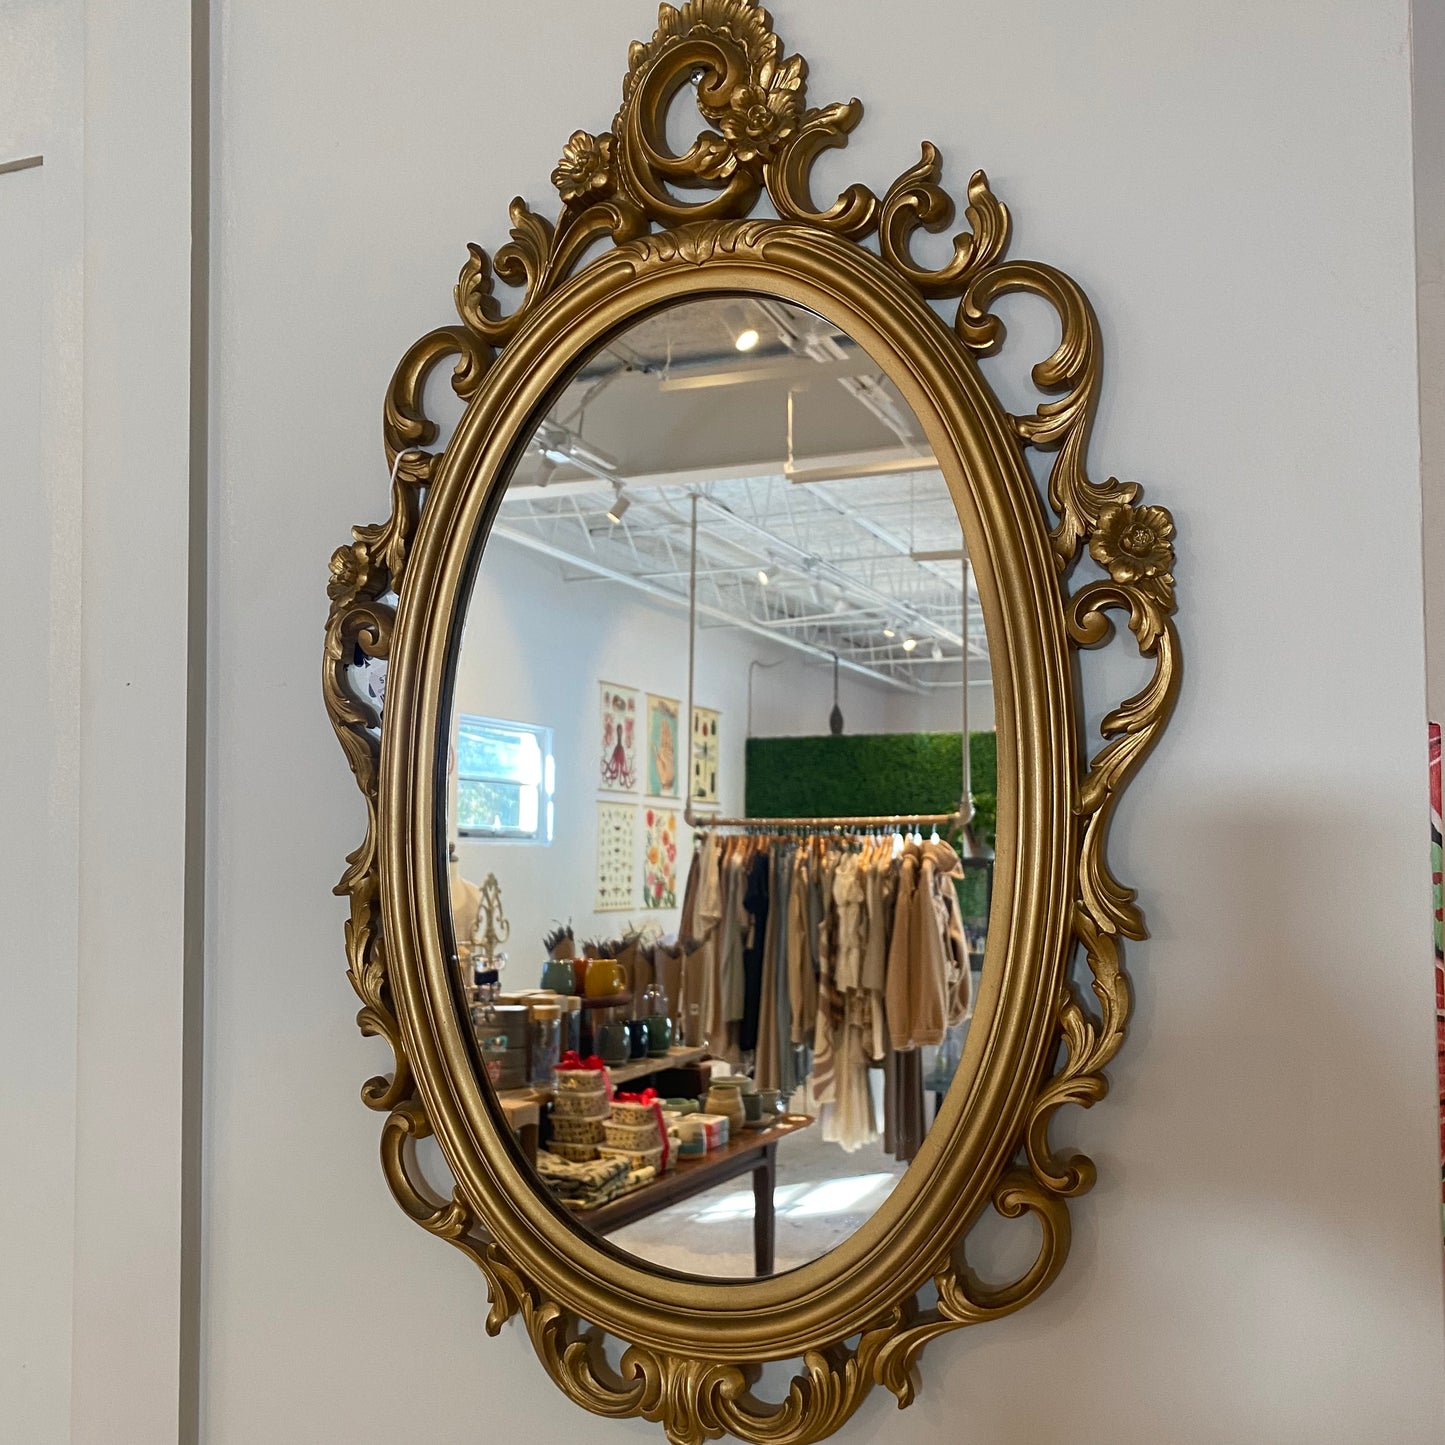 Ornate syroco mirror